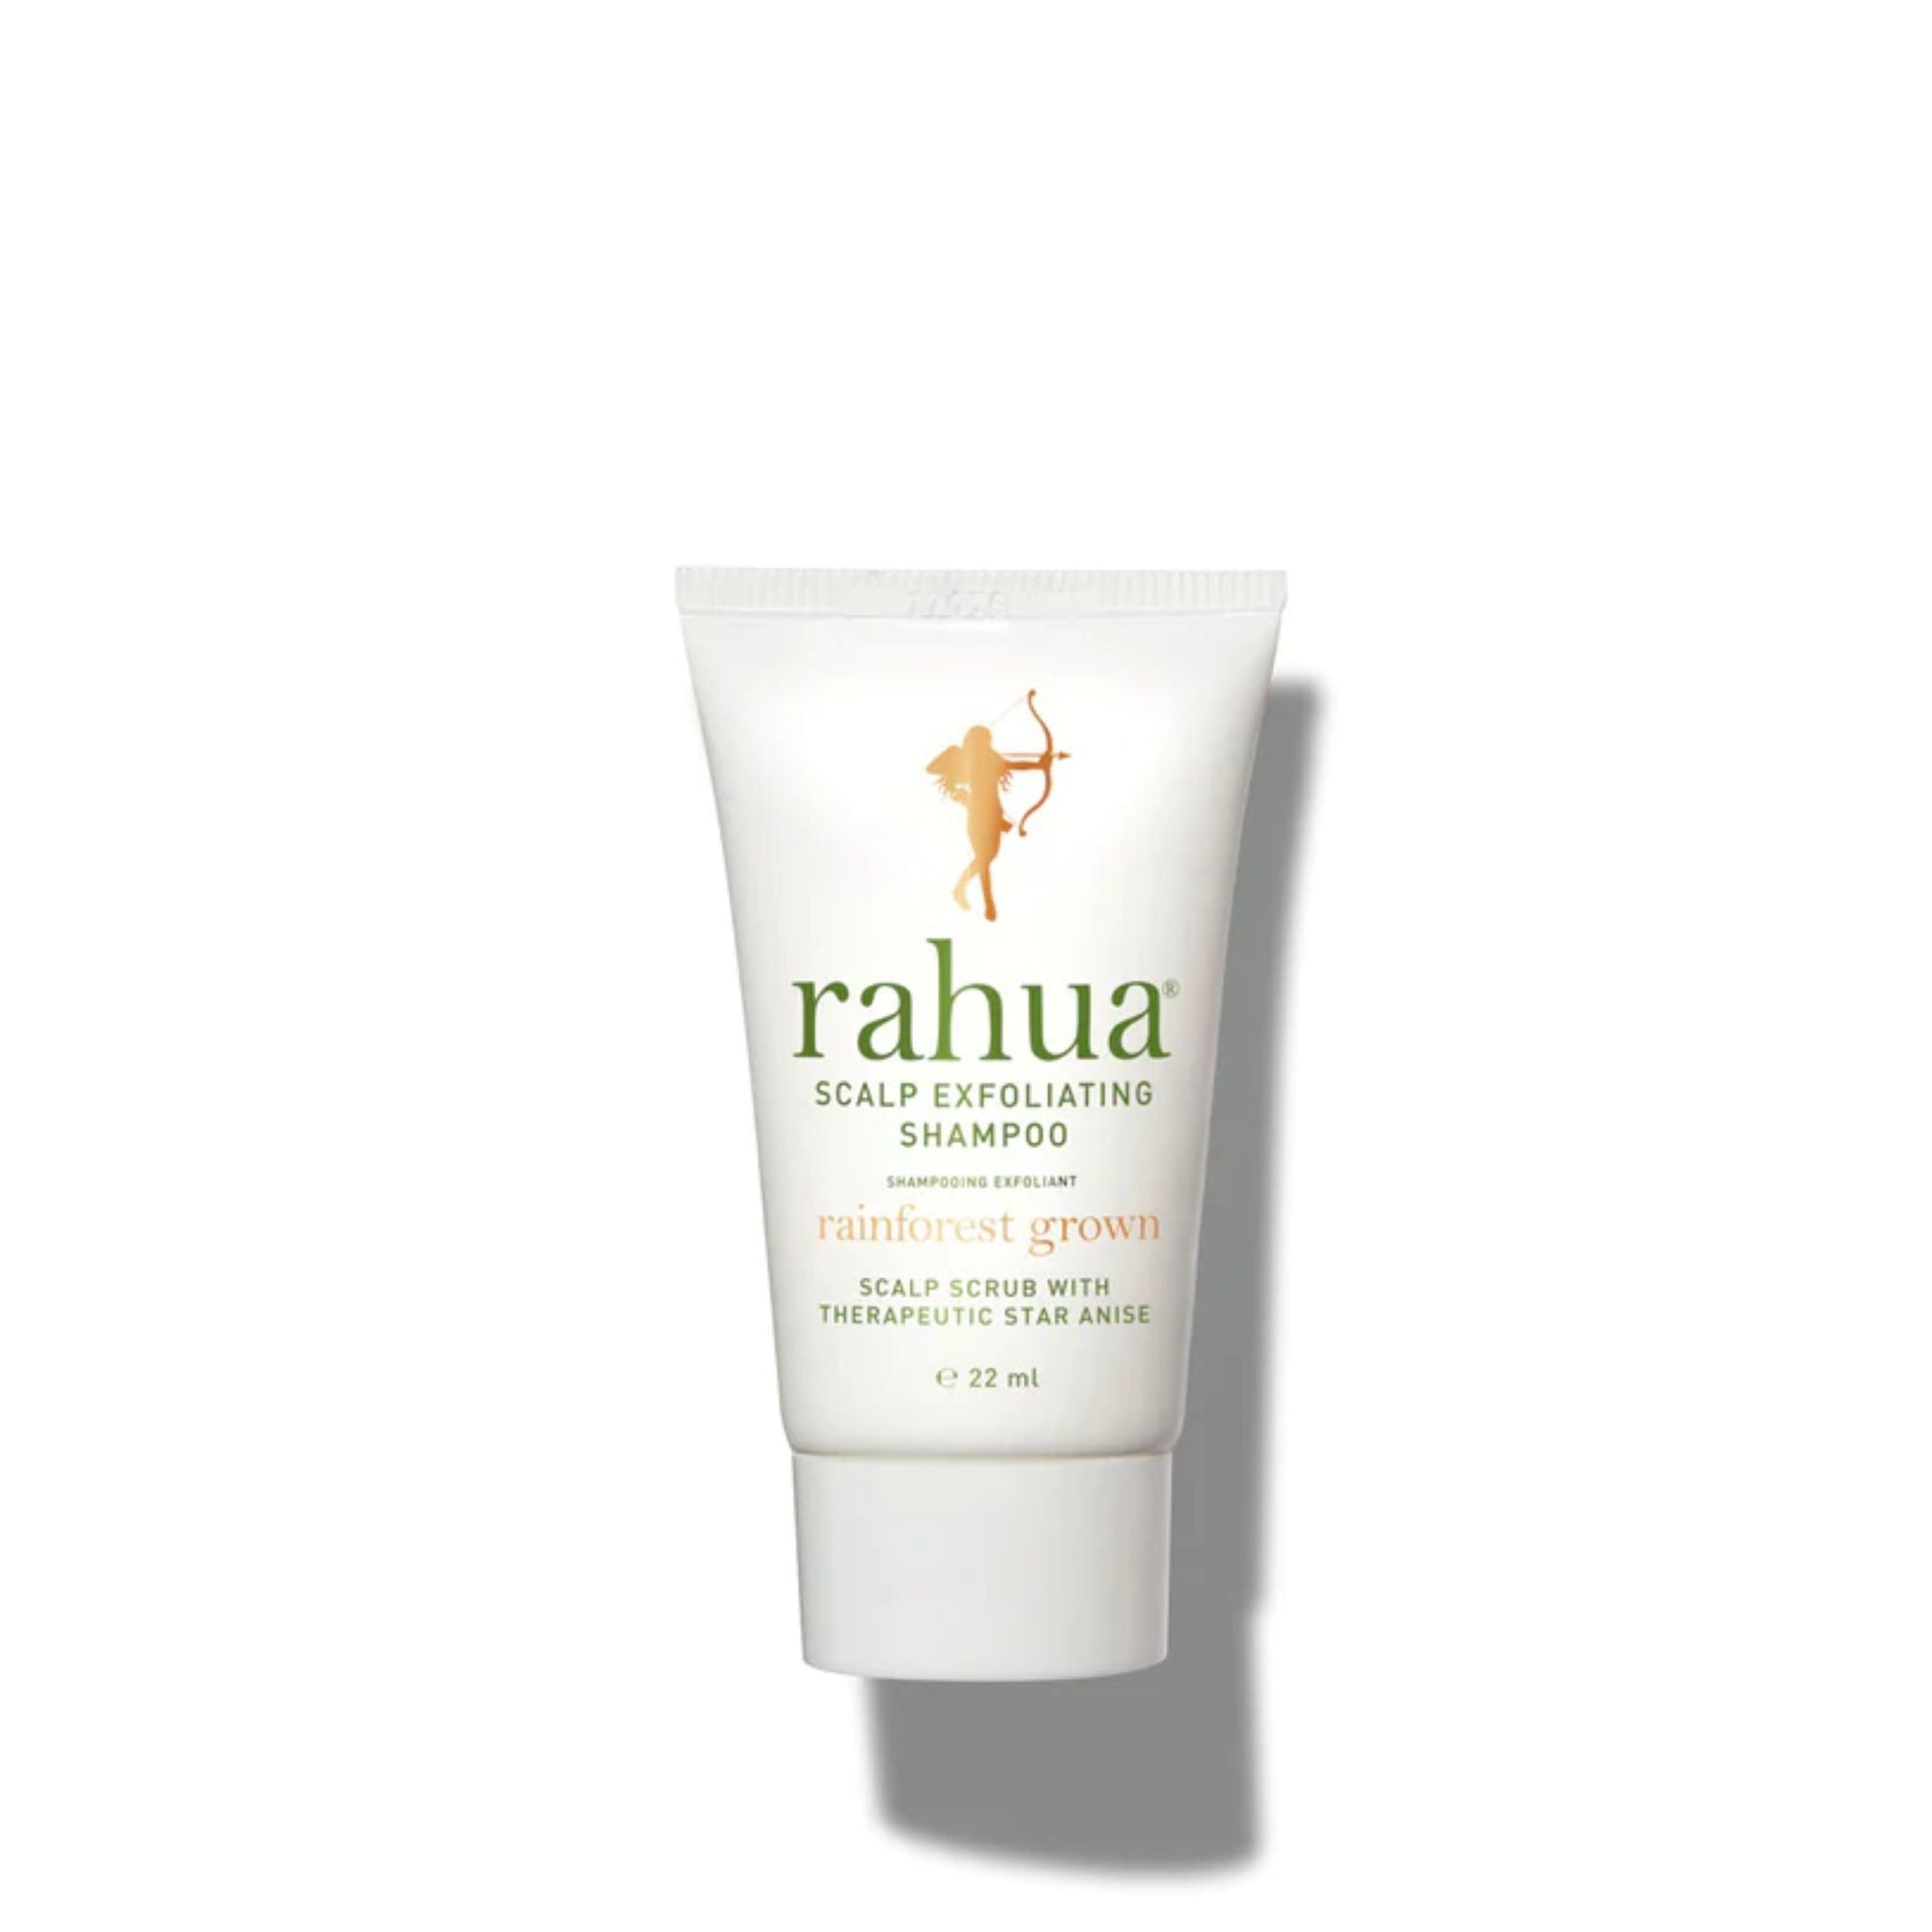 ORESTA clean beauty simplified - Rahua Scalp Exfoliating Shampoo Travel - ORESTA clean beauty simplified